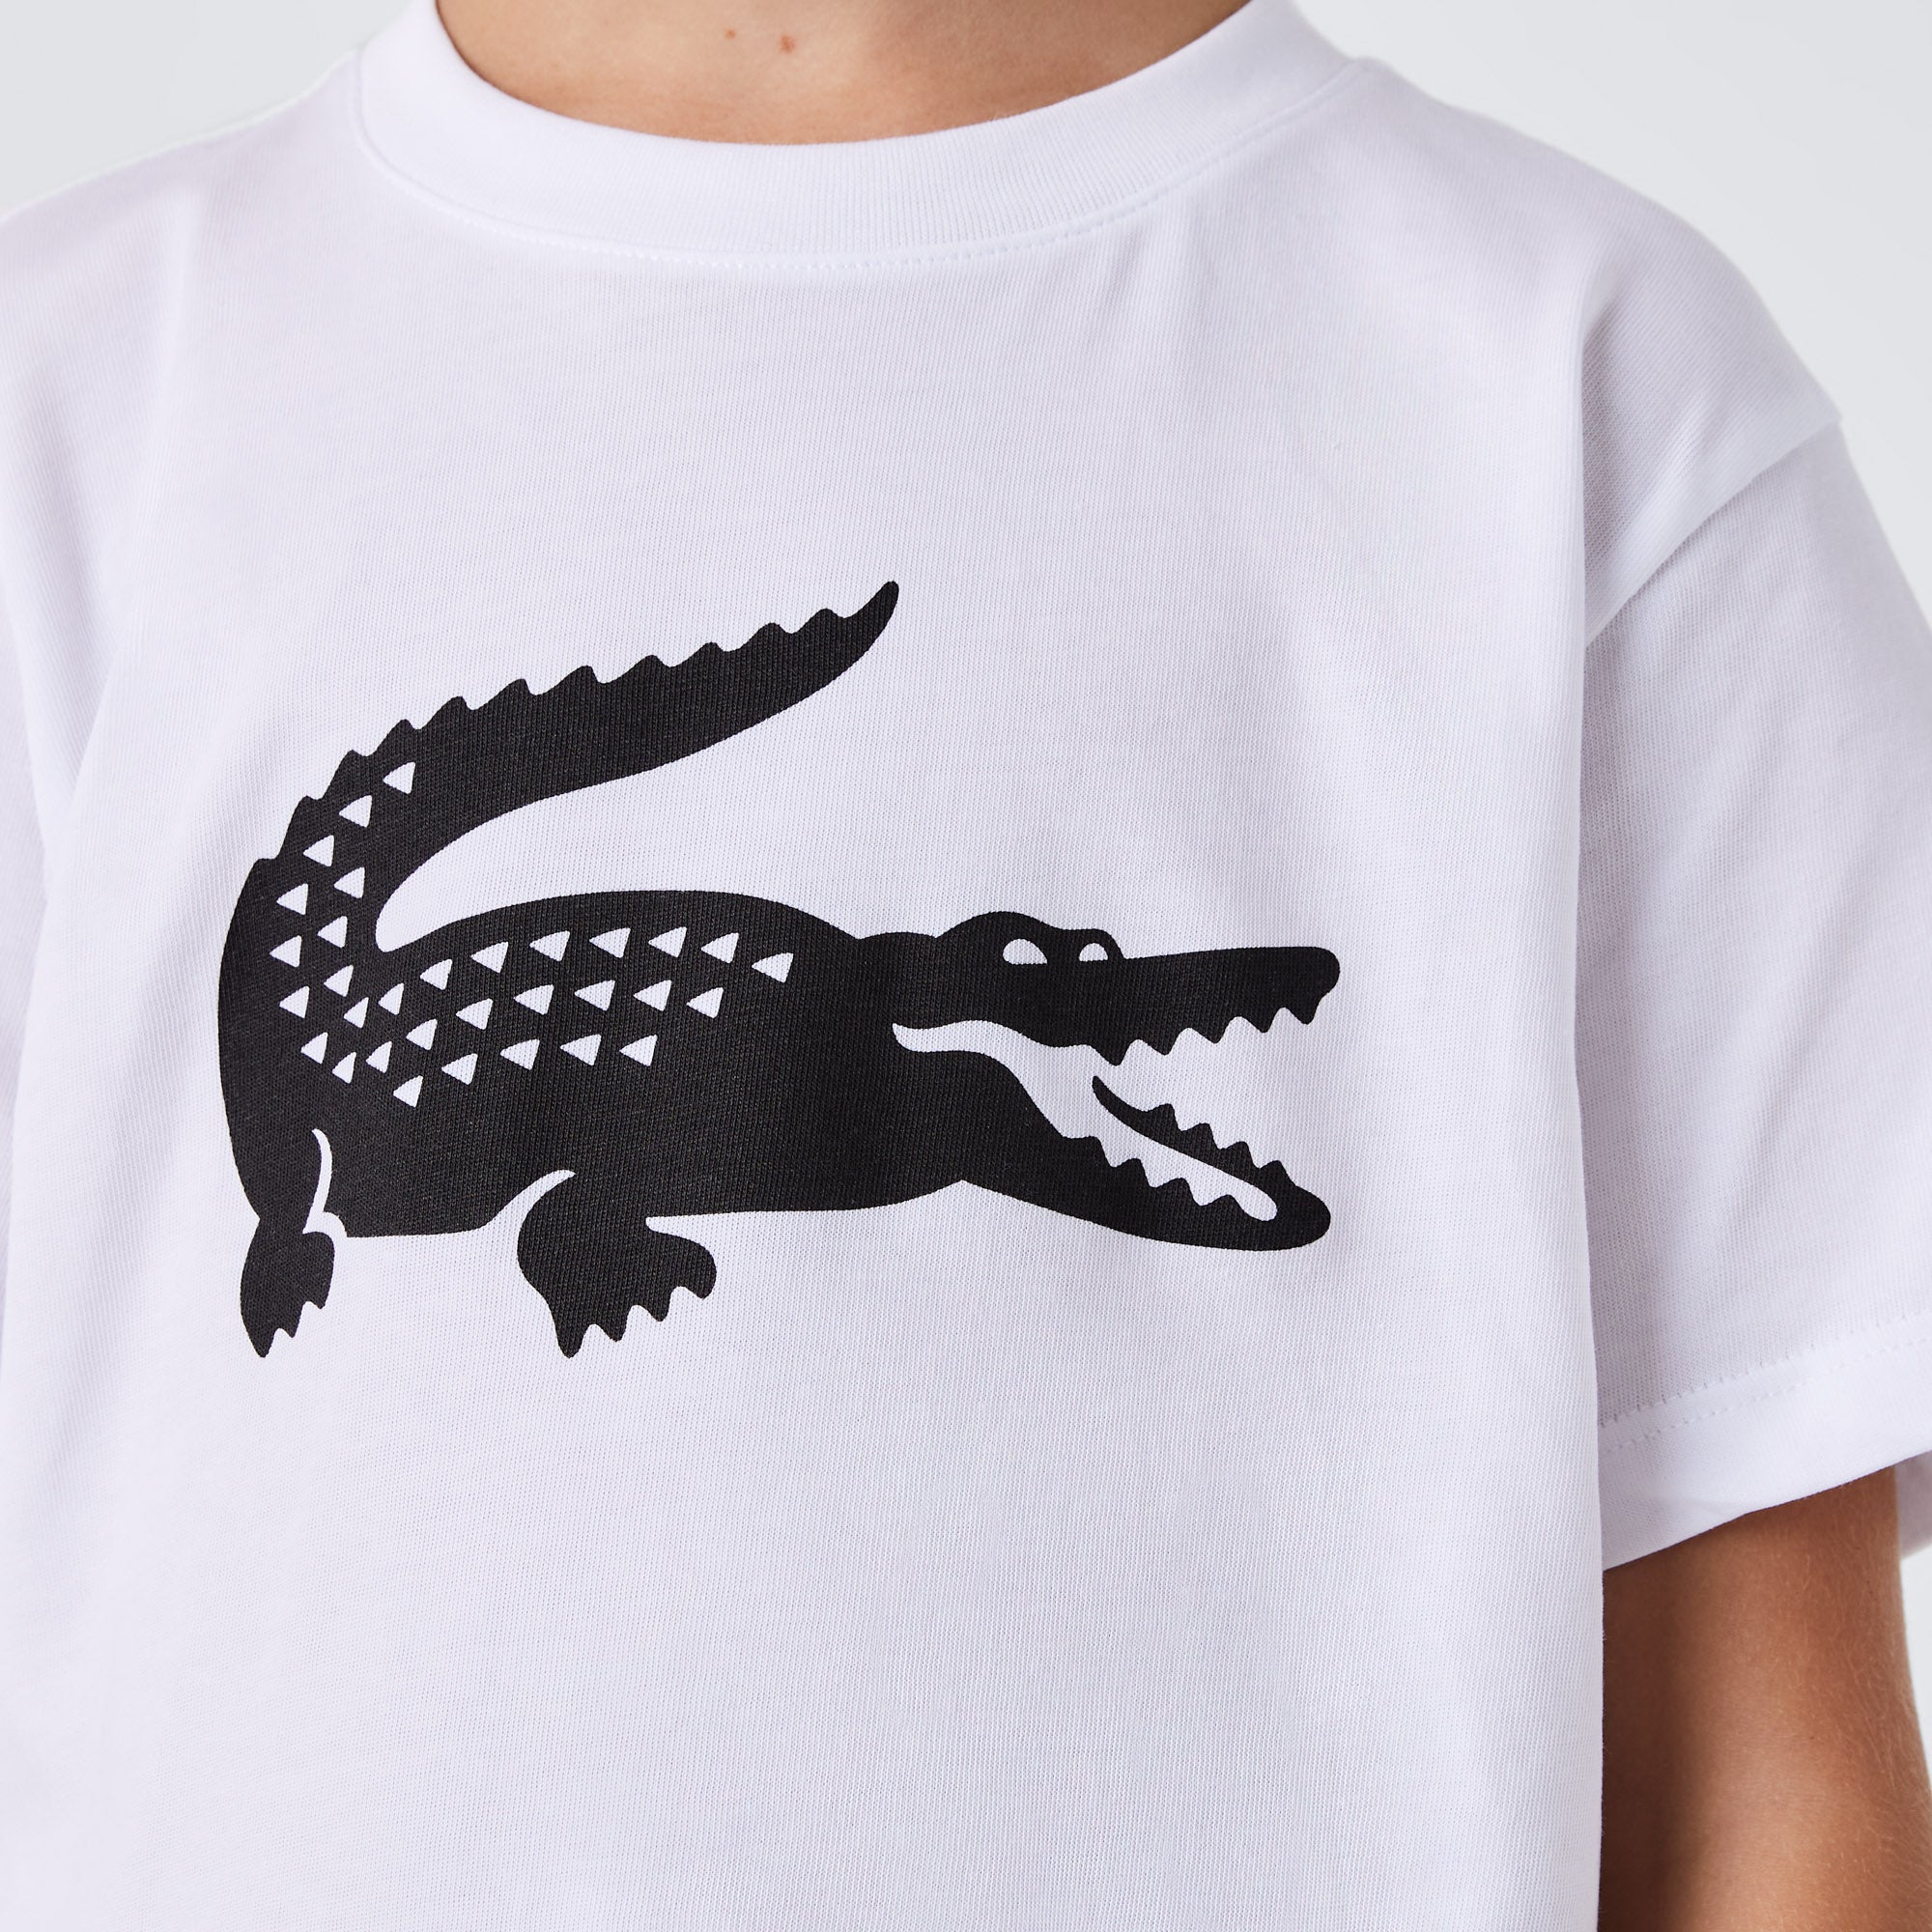 Lacoste Kids Performance Big Croc T-Shirt